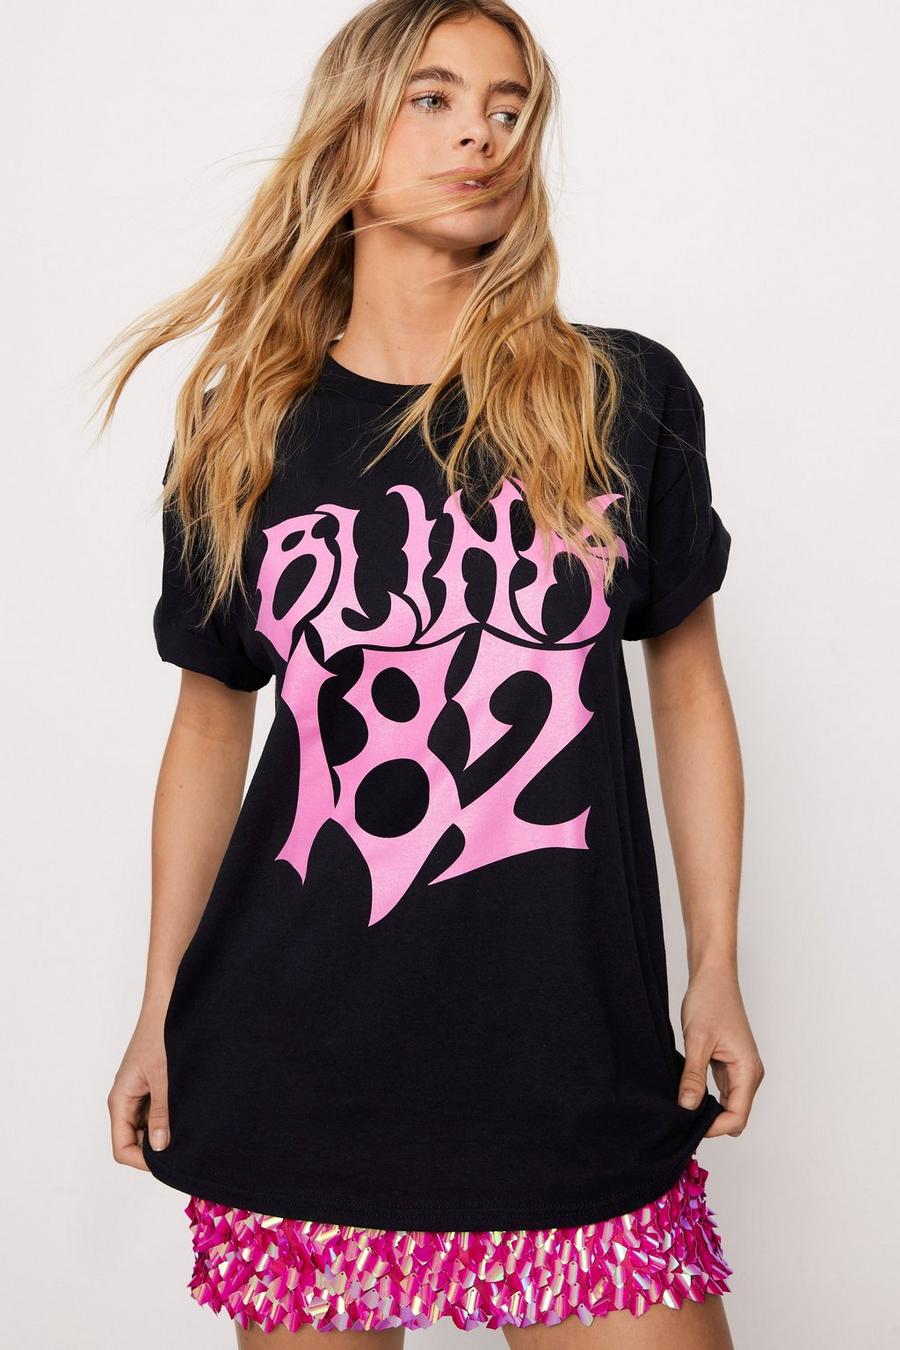 Blink-182 Oversized Graphic T-shirt